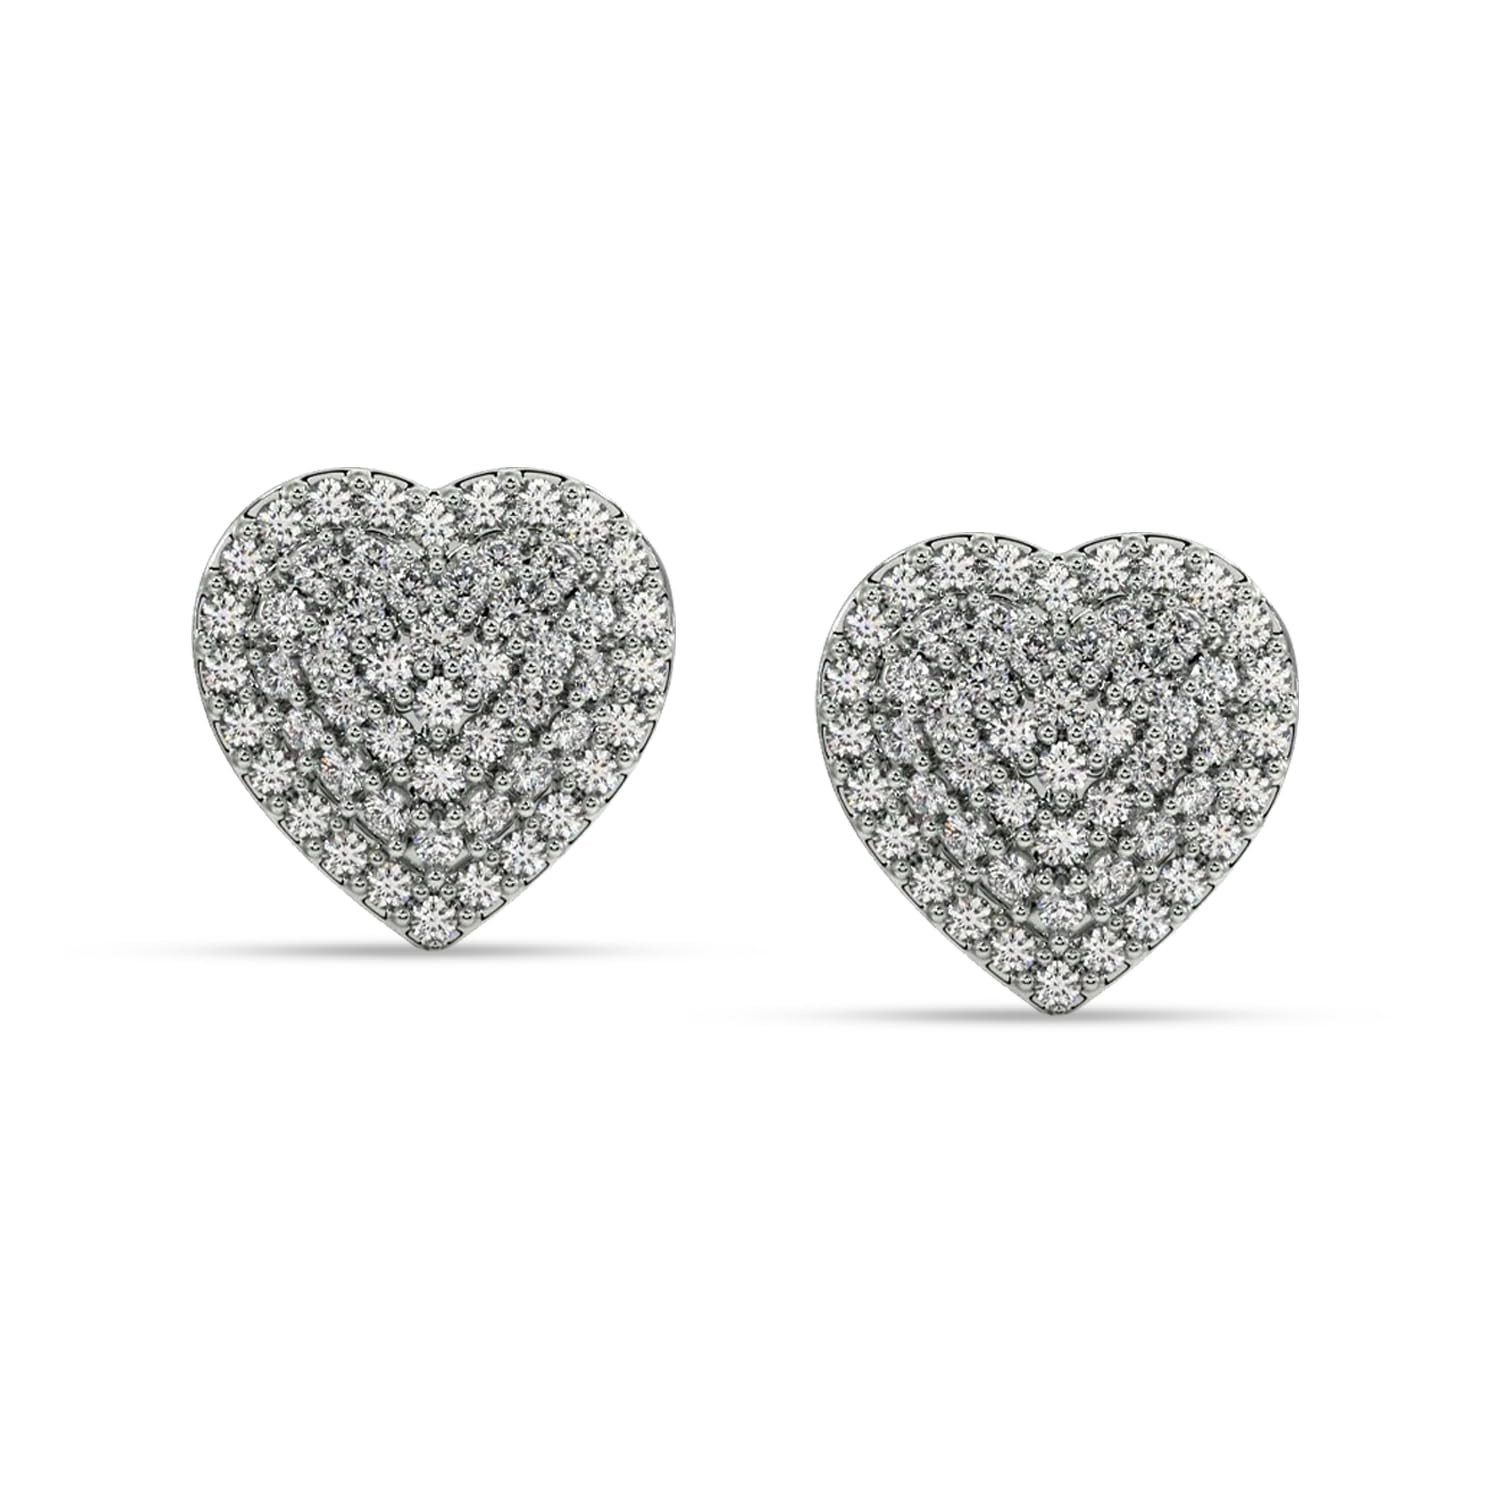 925 Sterling Silver Rhodium Plated Zirconia Heart Shaped Studs Earrings for Women Teen